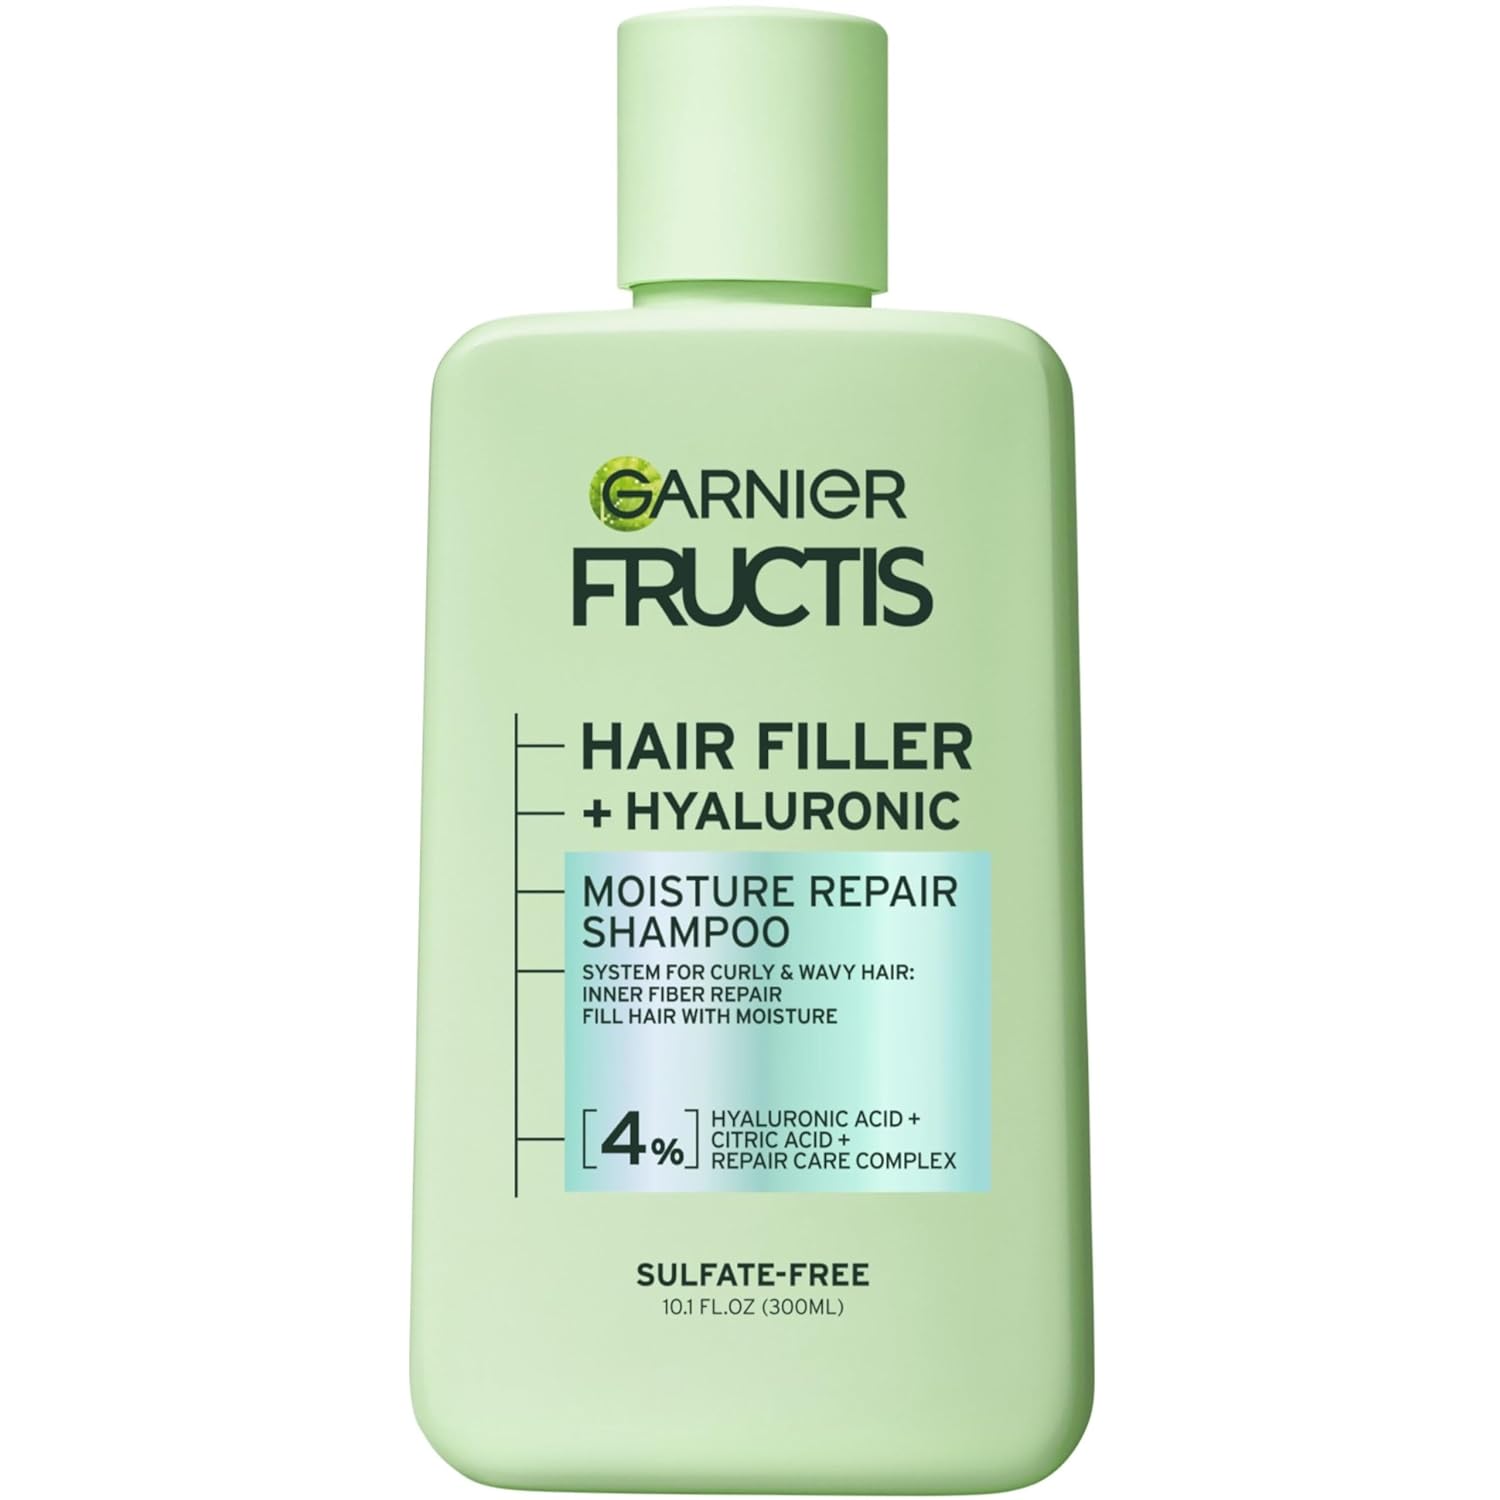 Garnier Fructis Hair Filler Moisture Repair Shampoo for Curly, Wavy Hair, with Hyaluronic Acid, 10.1 FL OZ, 1 Count